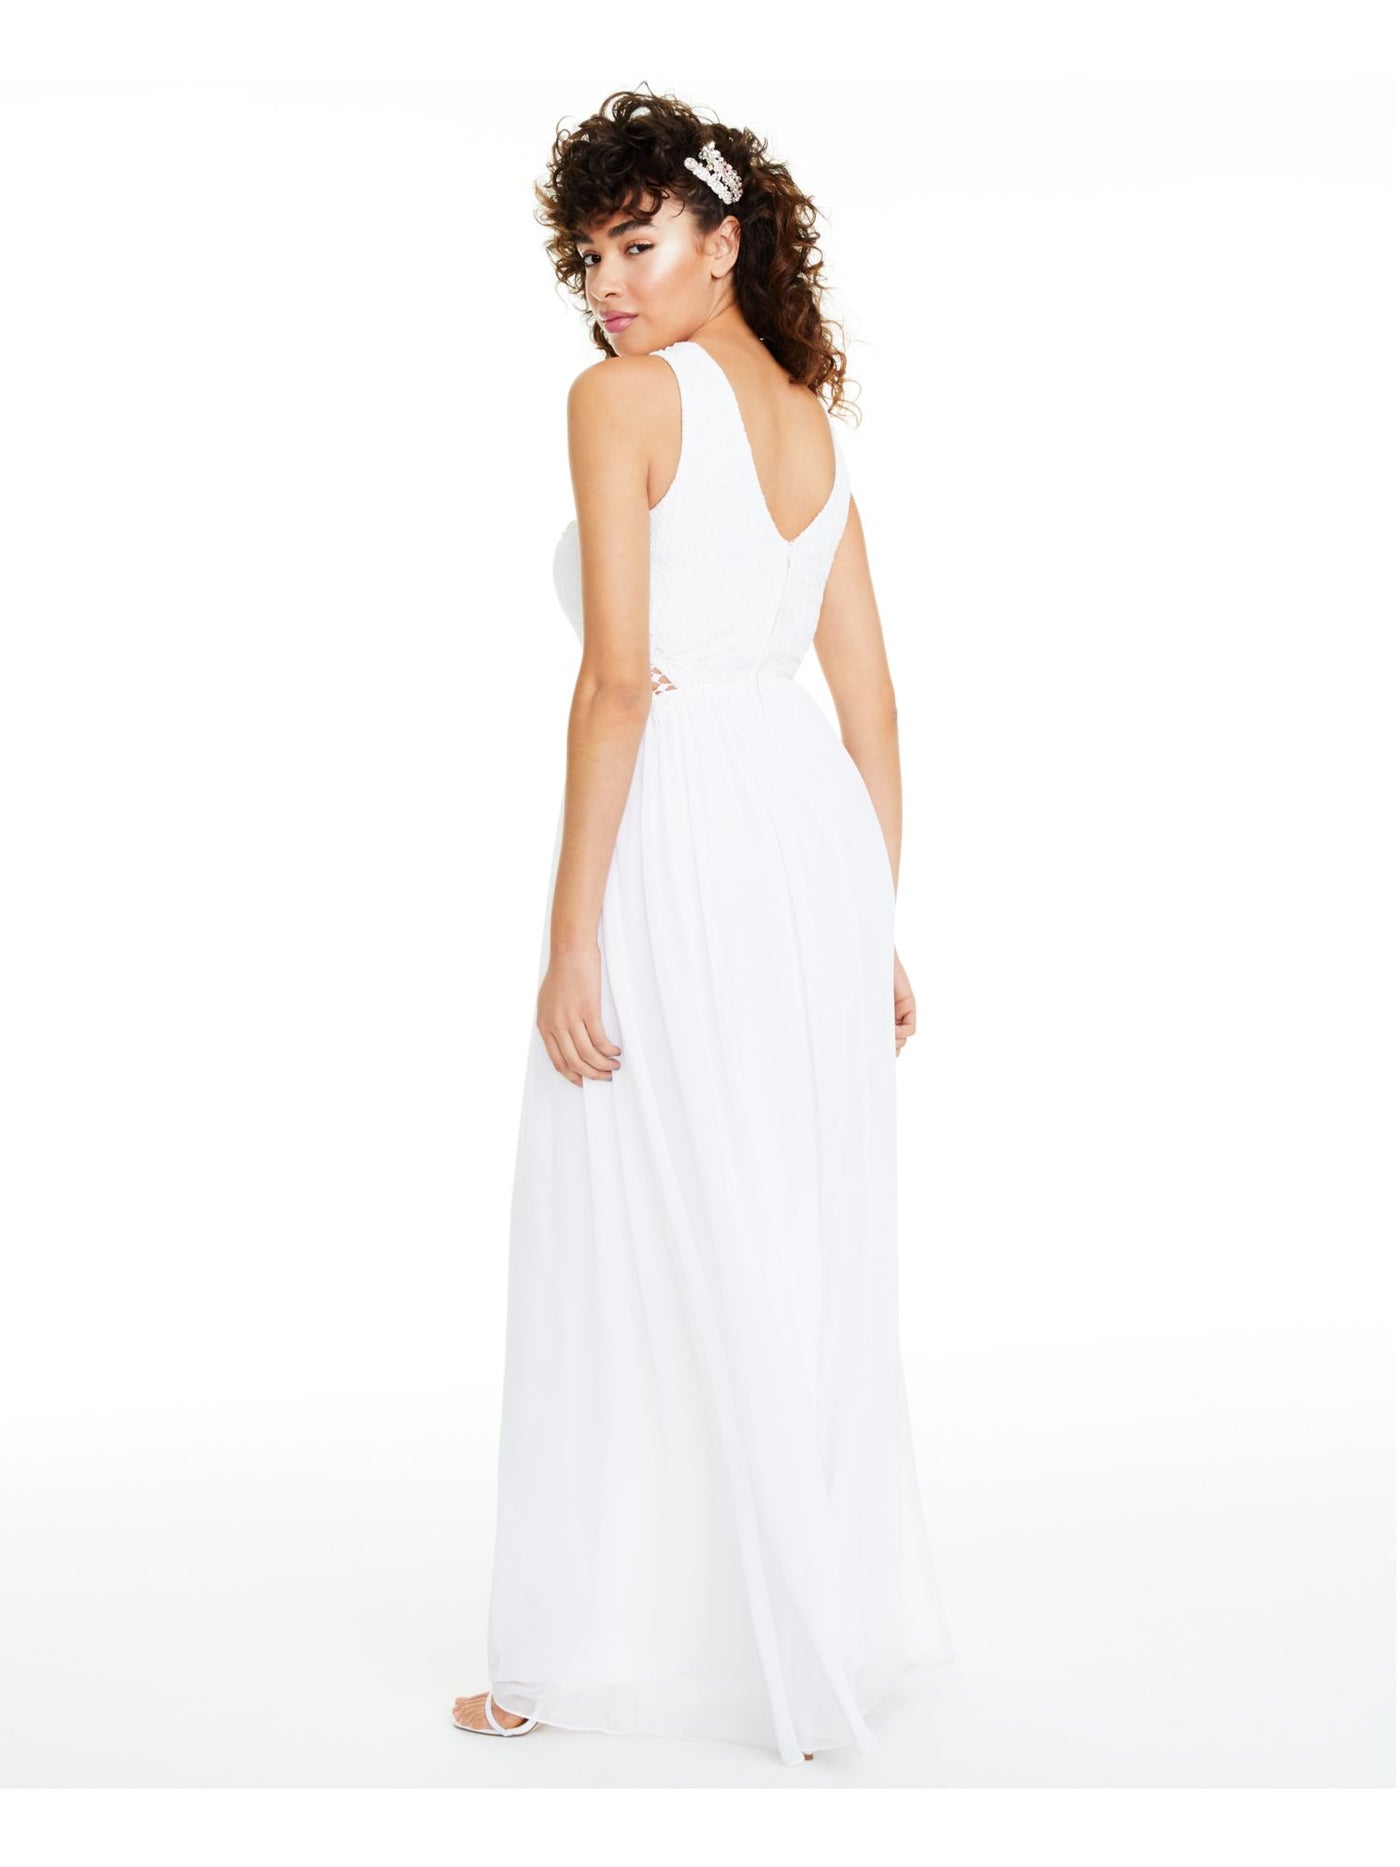 CITY STUDIO Womens Zippered Beaded Sleeveless Illusion Neckline Full-Length Formal Fit + Flare Dress